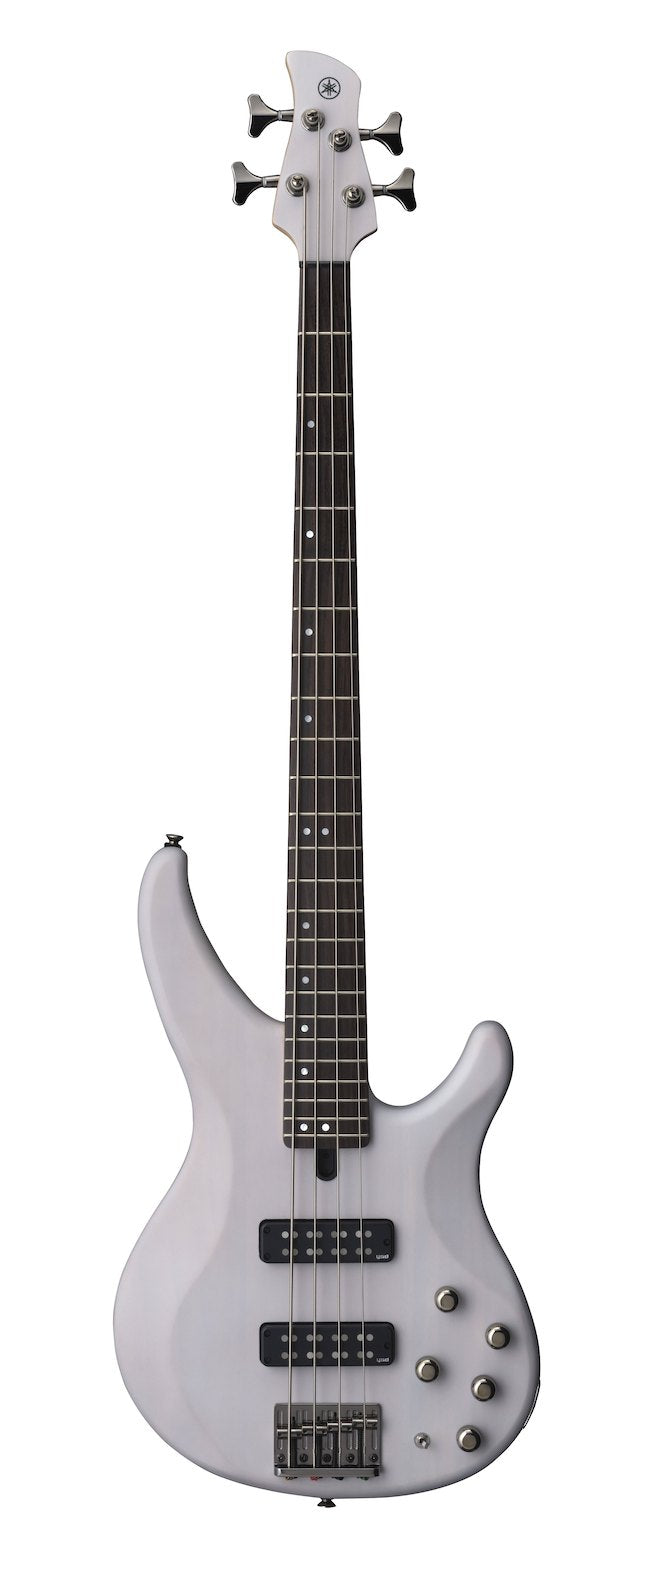 Yamaha TRBX504 Bass Guitar - Translucent White